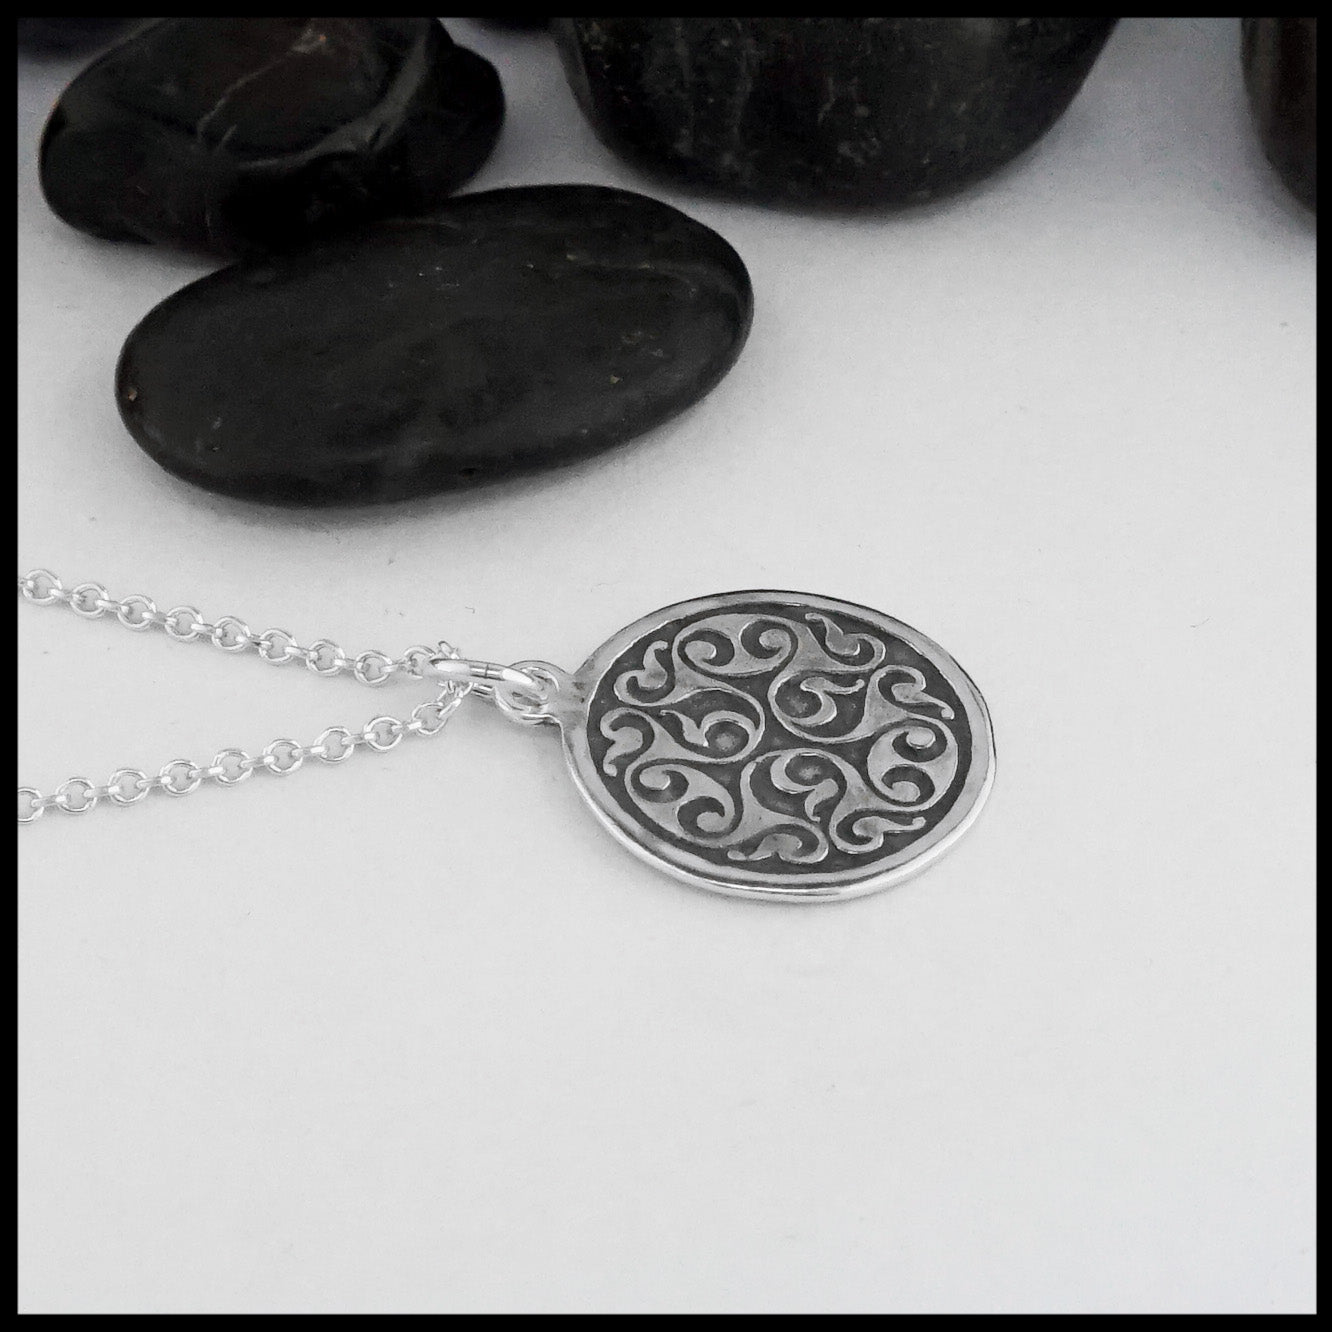 Baldur Jewelry - Triskelion Celtic Spiral Pendant Necklace With Adjustable  String - Triskelion Necklace Celtic Spiral Jewelry - Triple Spiral Necklace